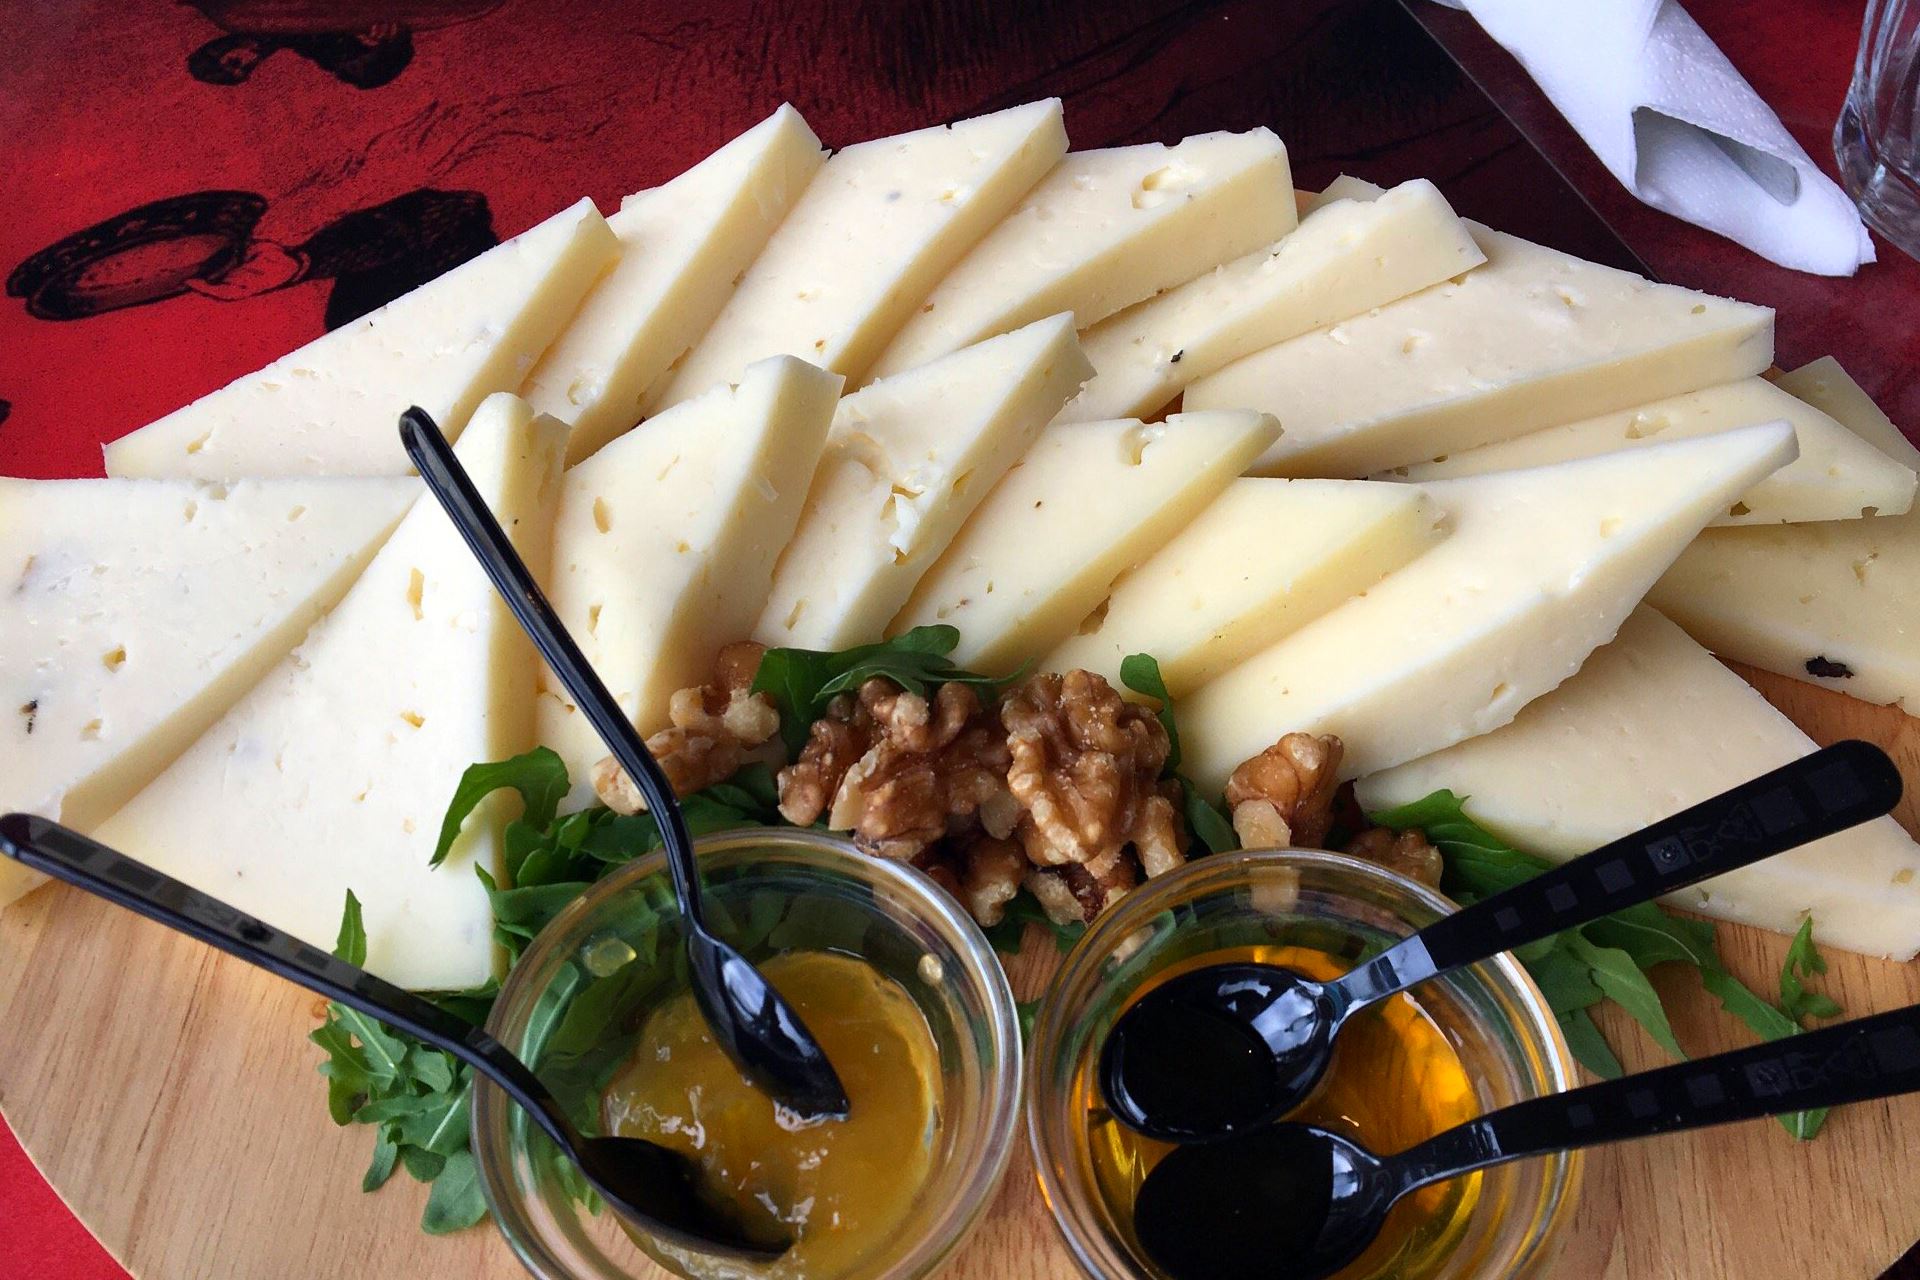 Pecorino & Caciotta Cheeses typical cheese of Umbria